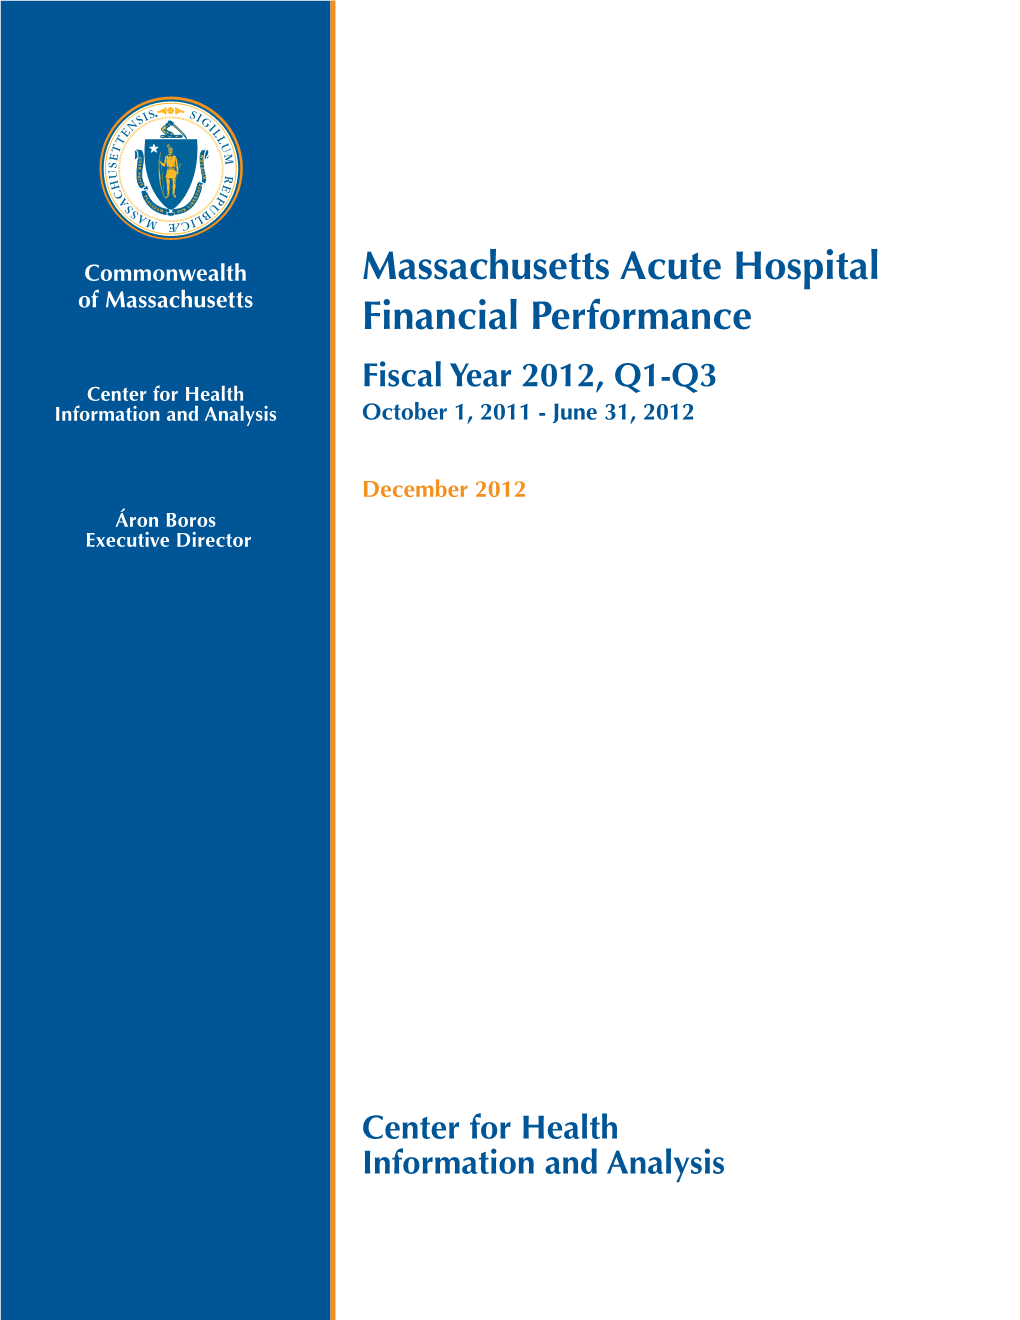 Massachusetts Hospital Financial Performance